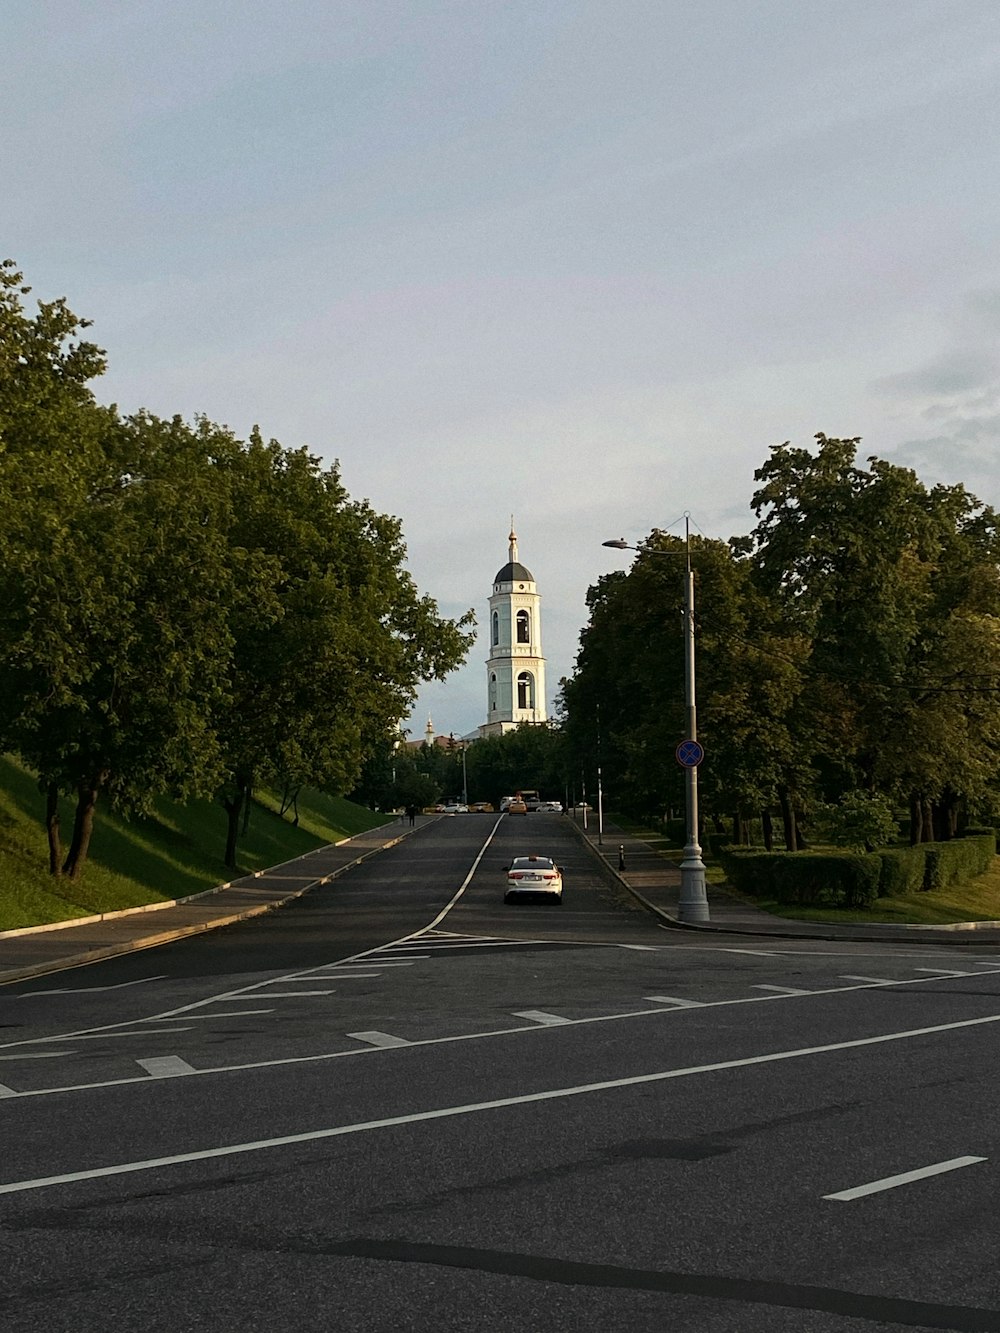 a car driving down a street next to a clock tower